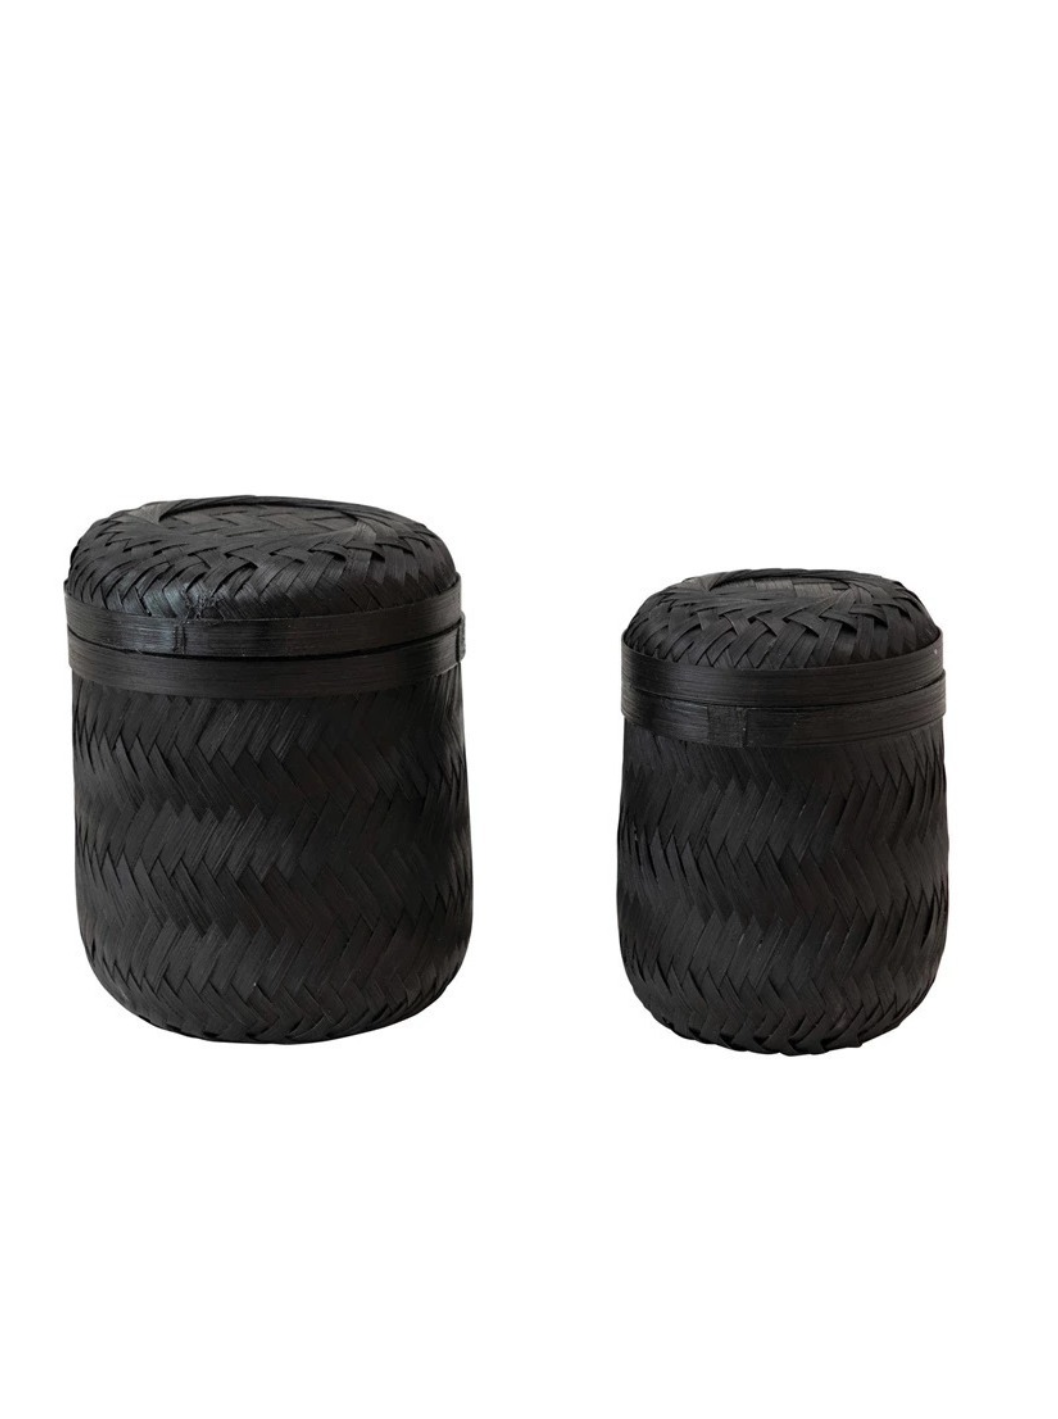 black baskets with lids, set of 2